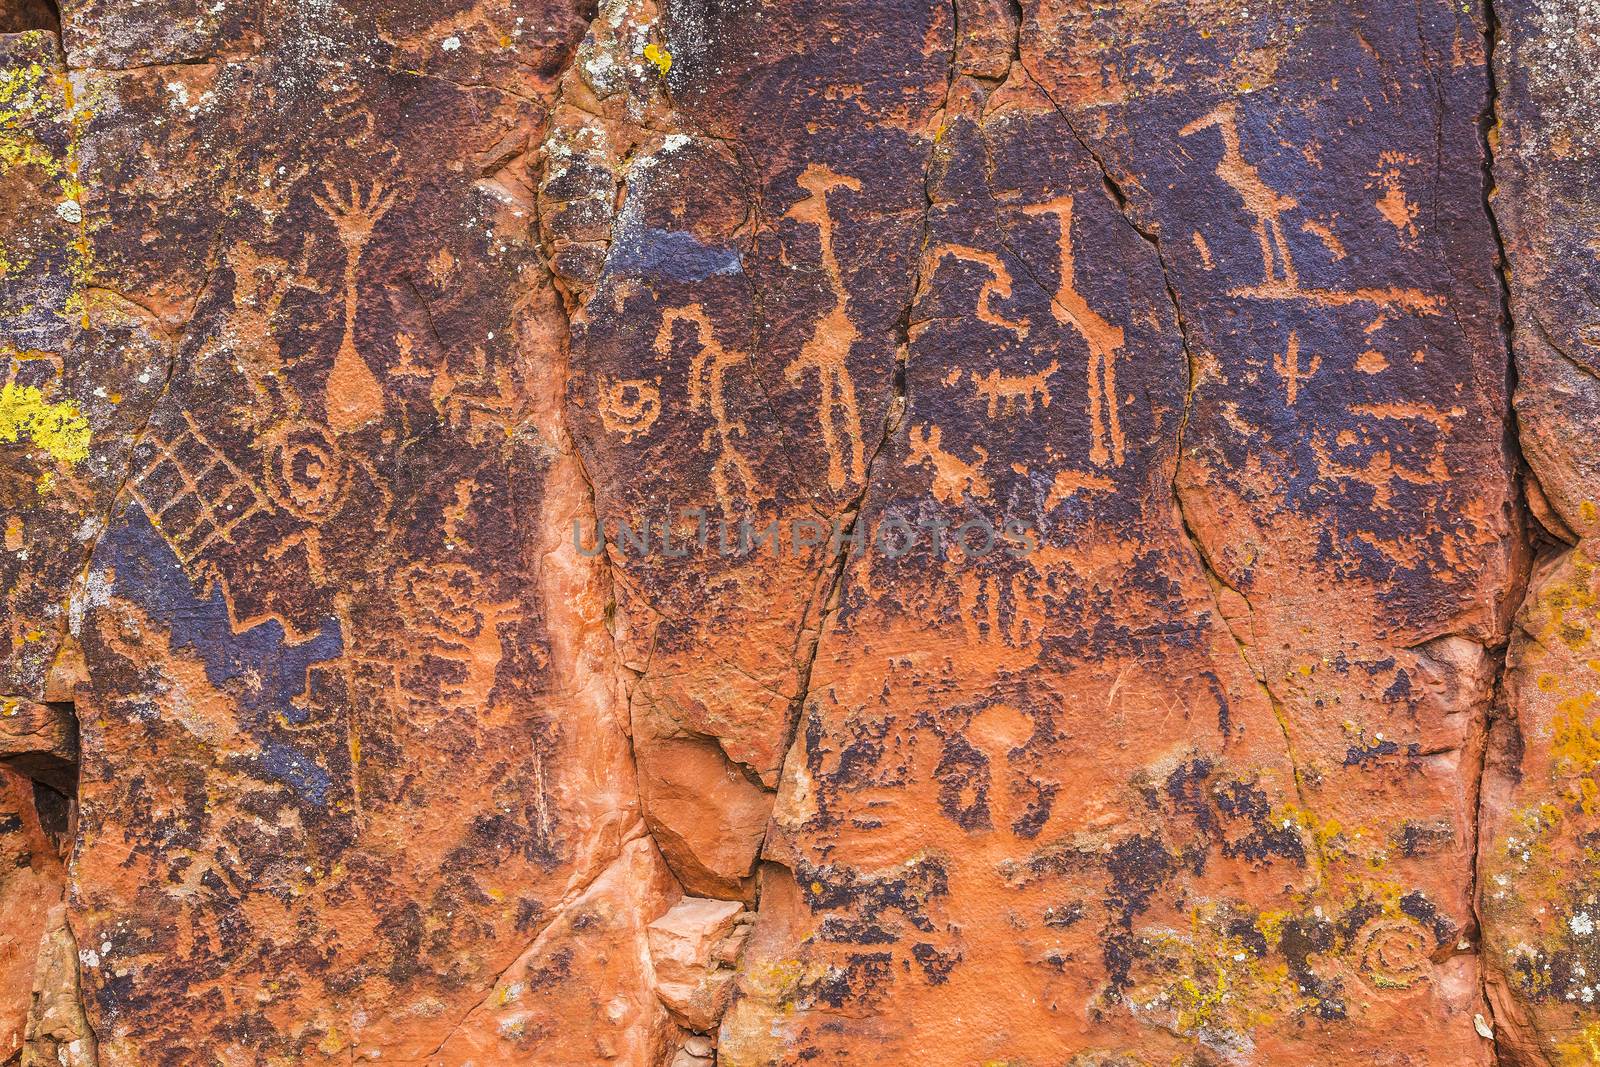 Multiple Sinaguan petroglyphs on a red rock panel